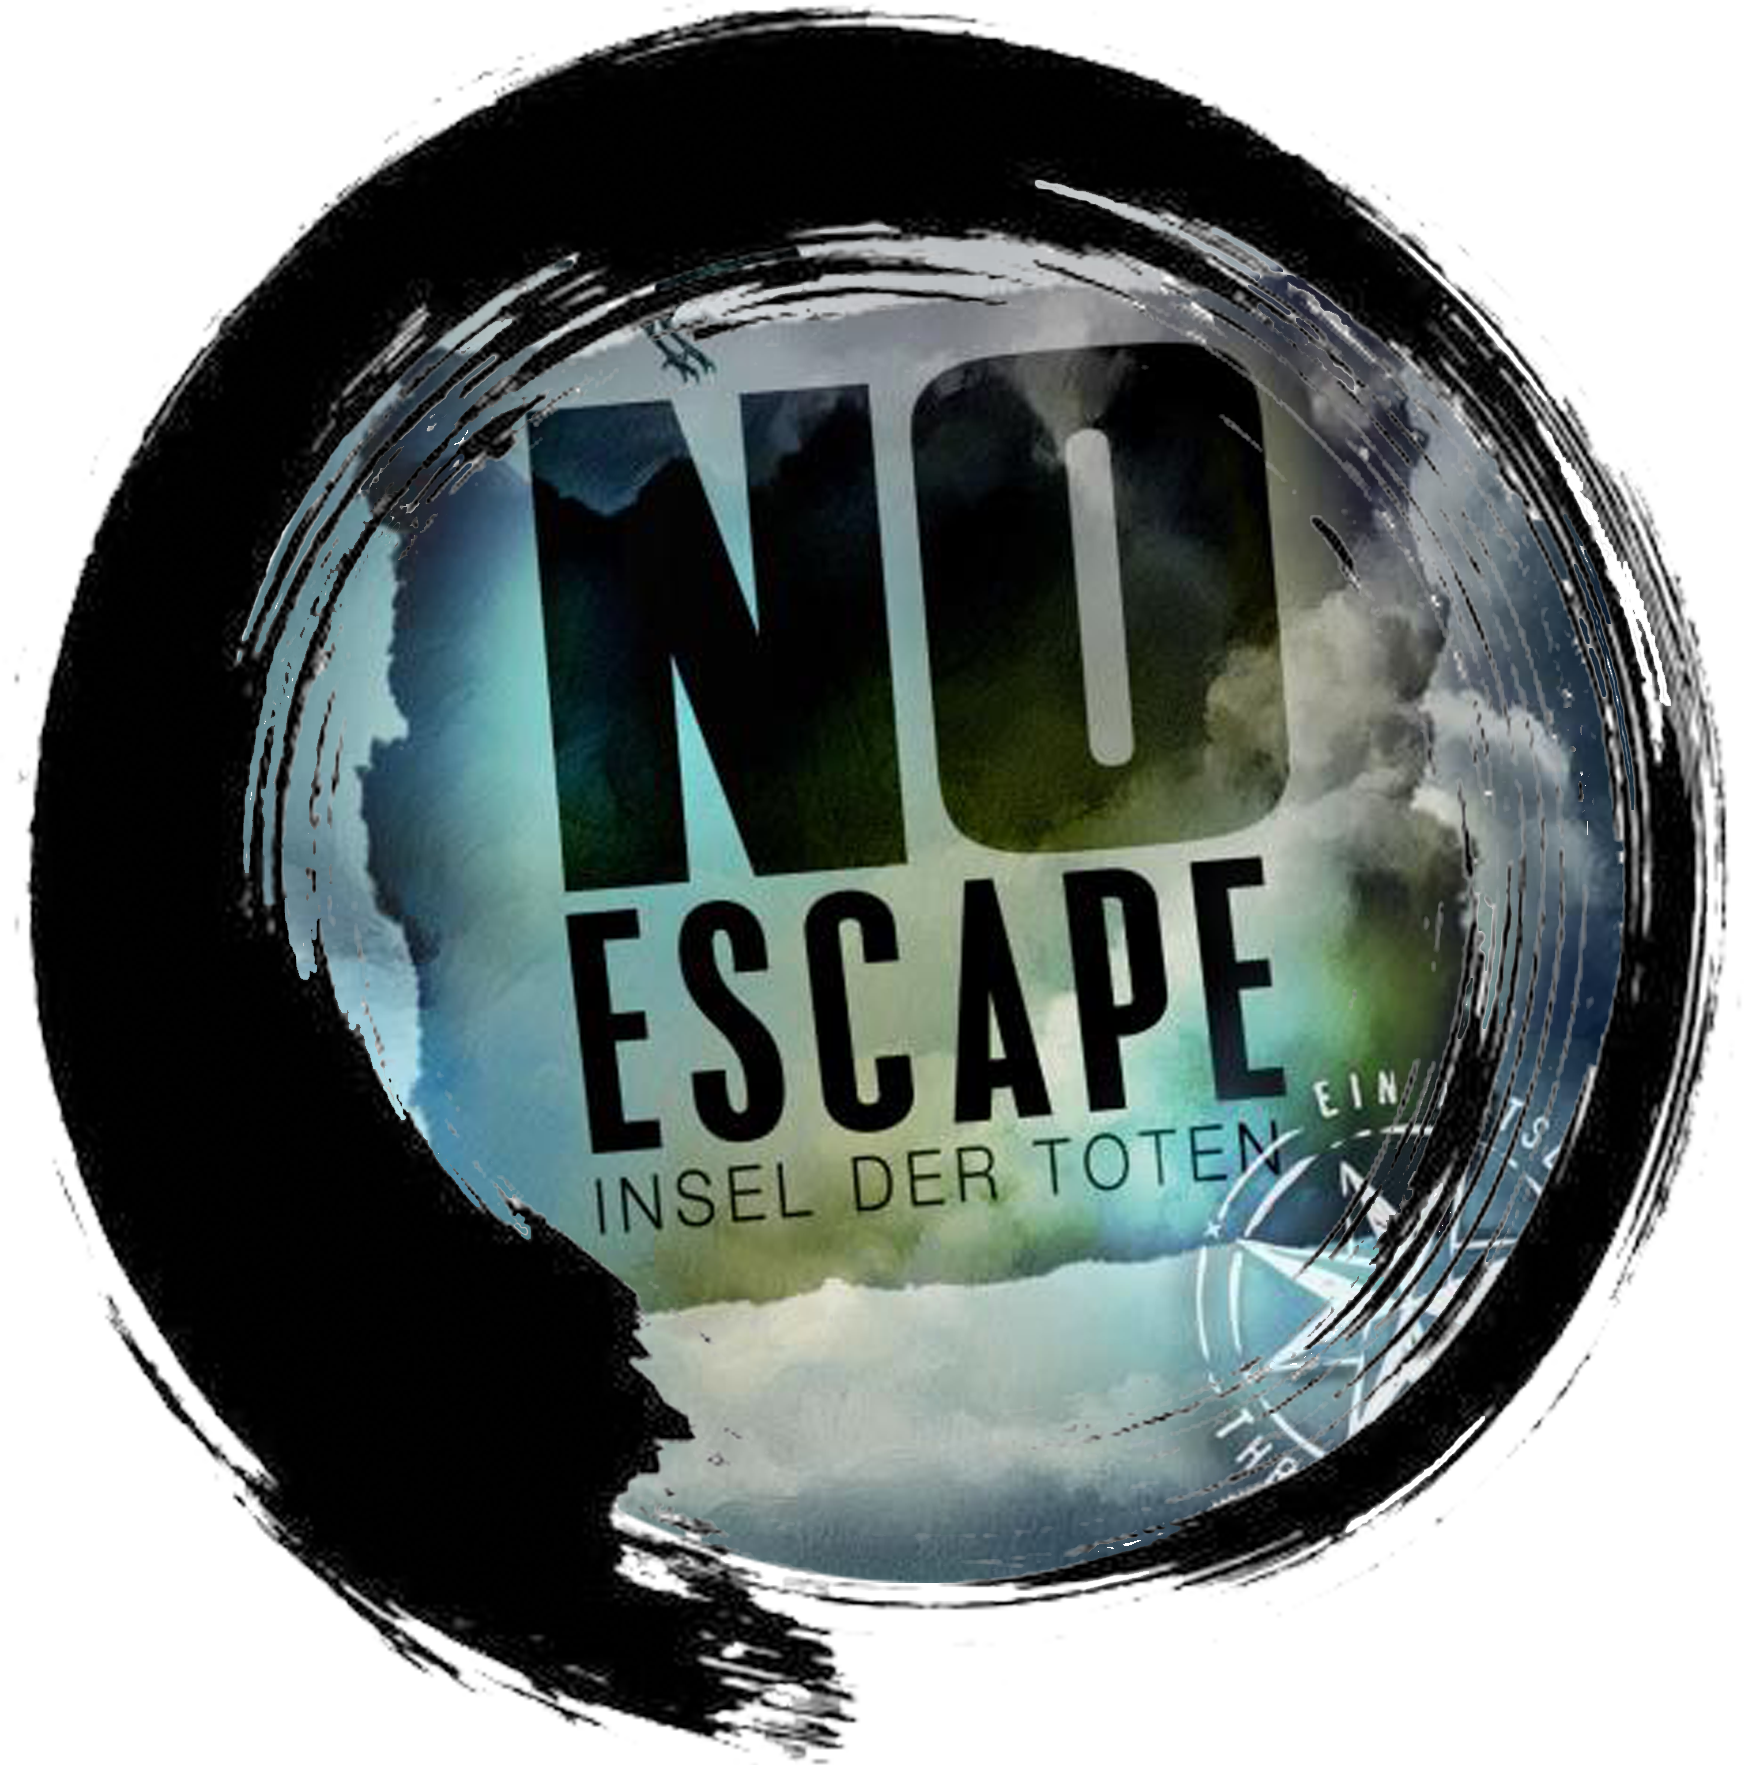 No Escape – Insel der Toten